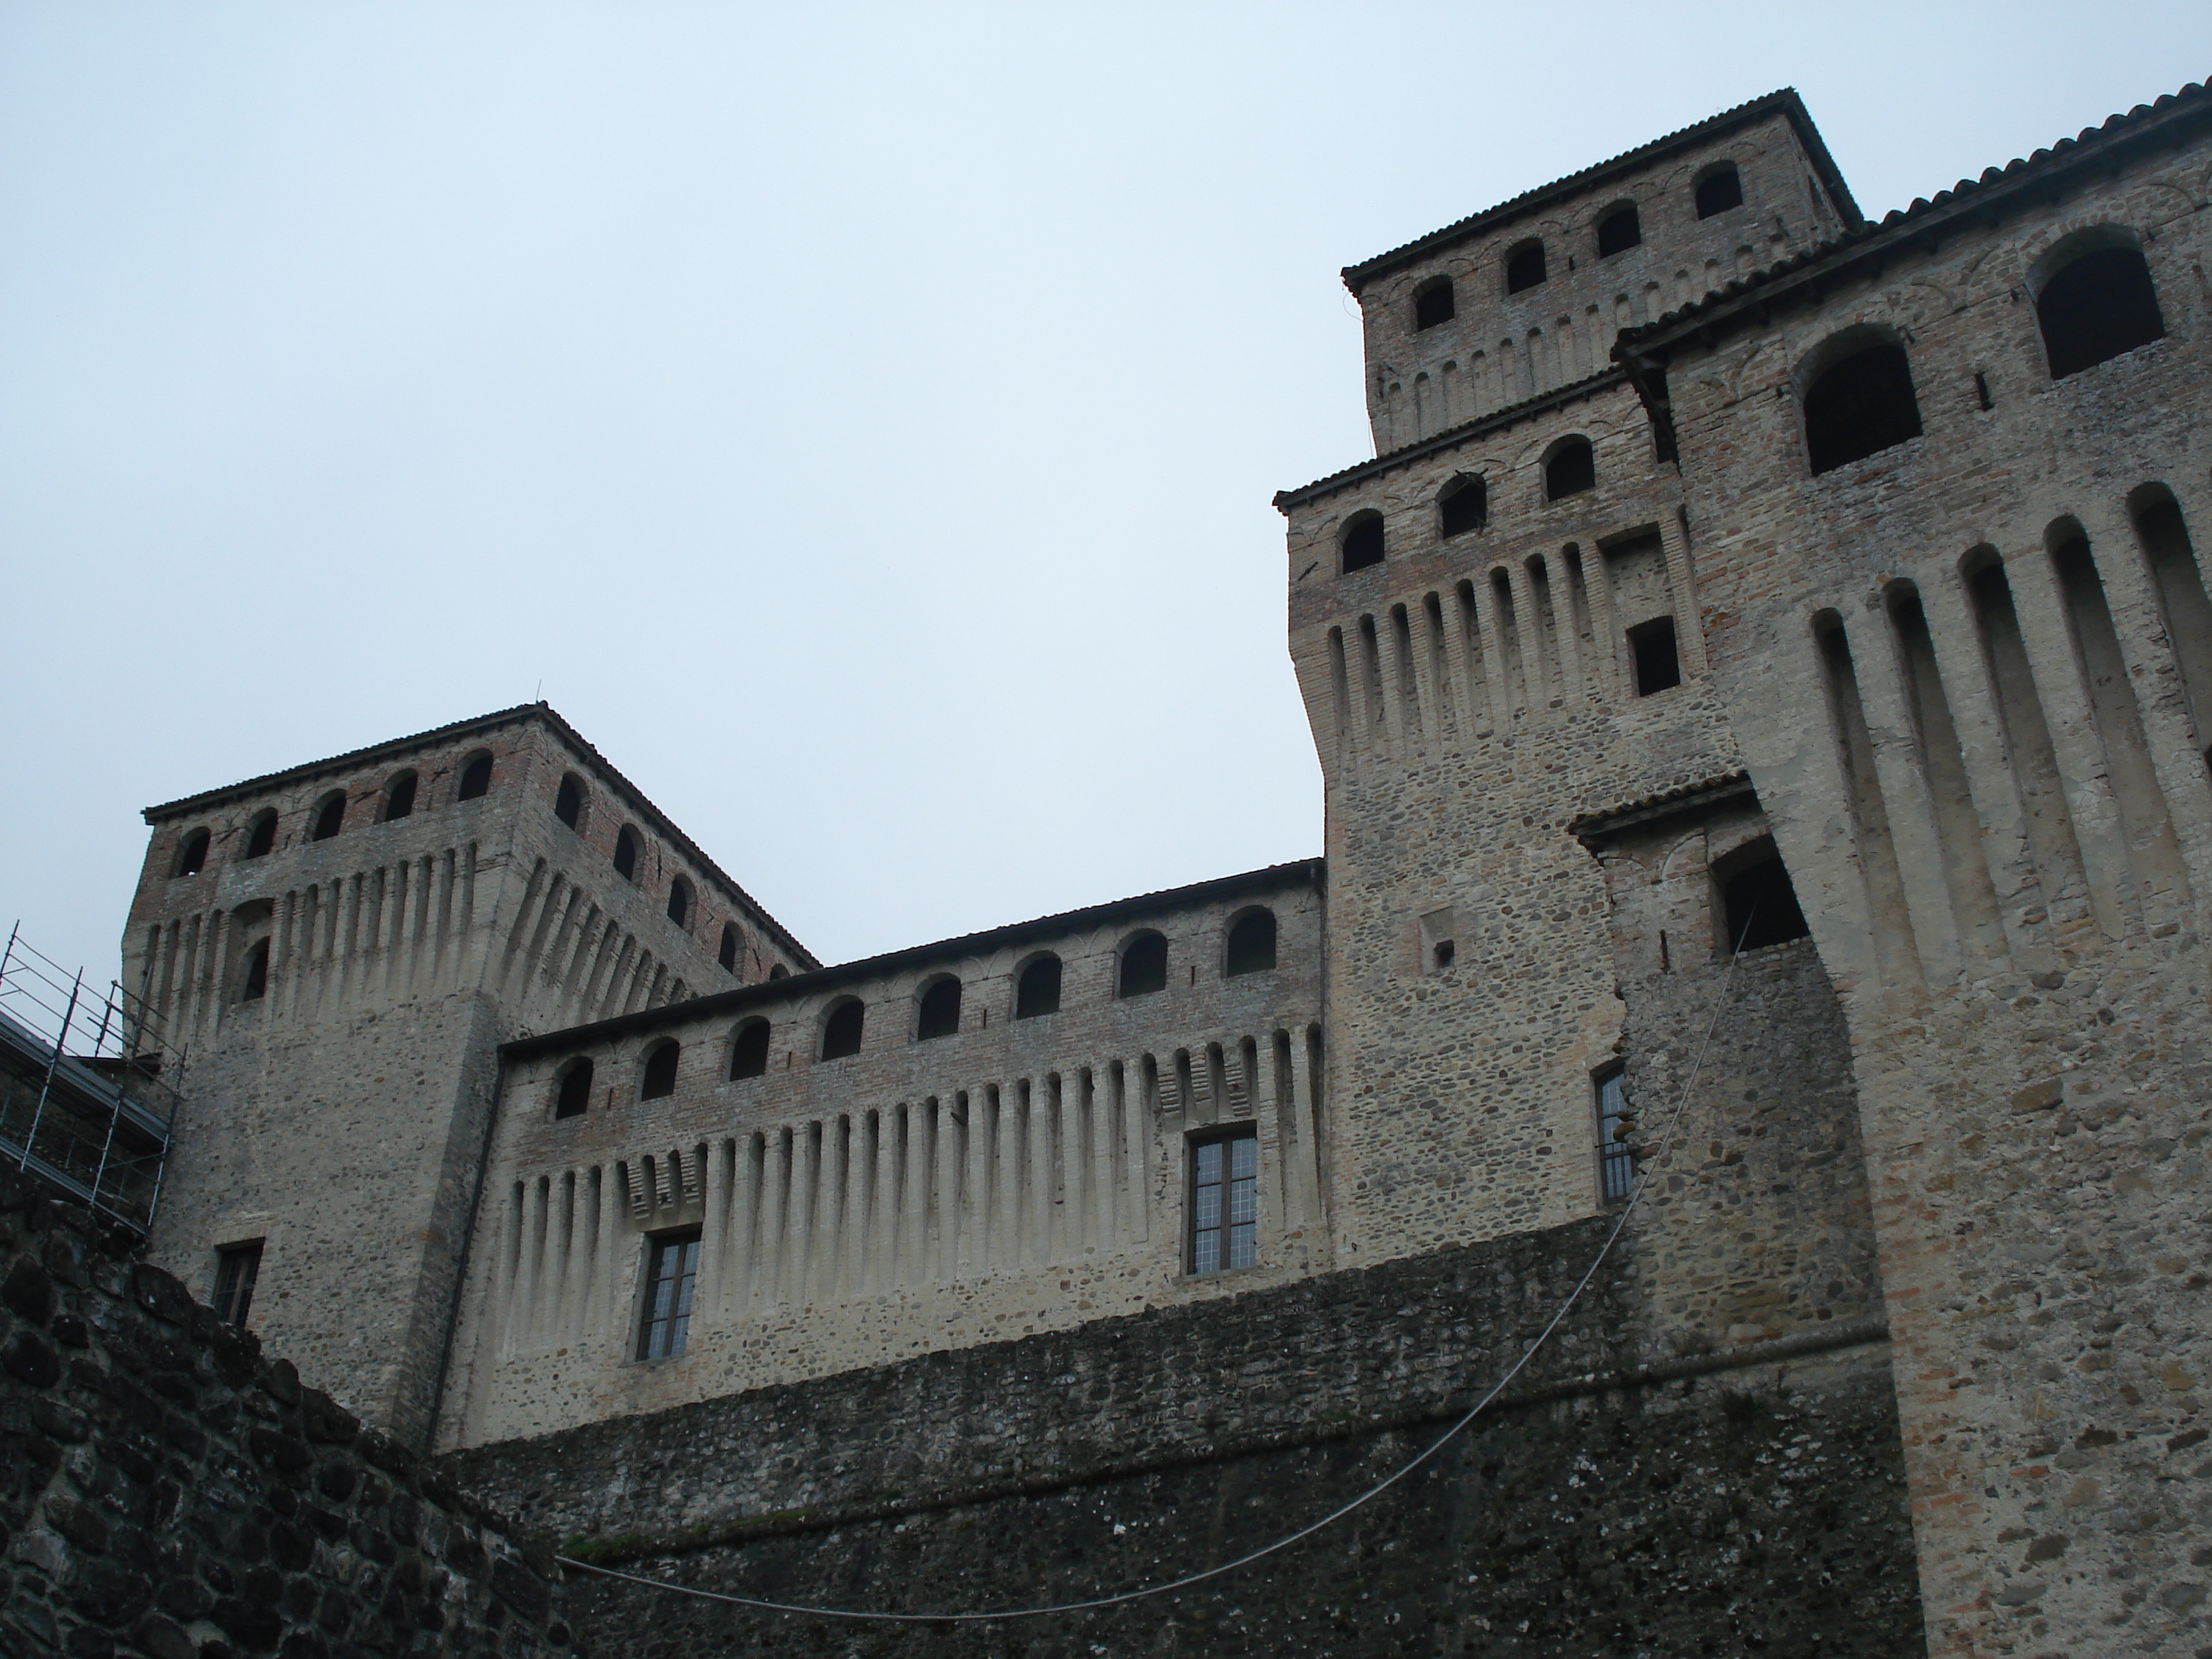 photo: https://upload.wikimedia.org/wikipedia/commons/4/49/Castello_di_Torrechiara_01.JPG